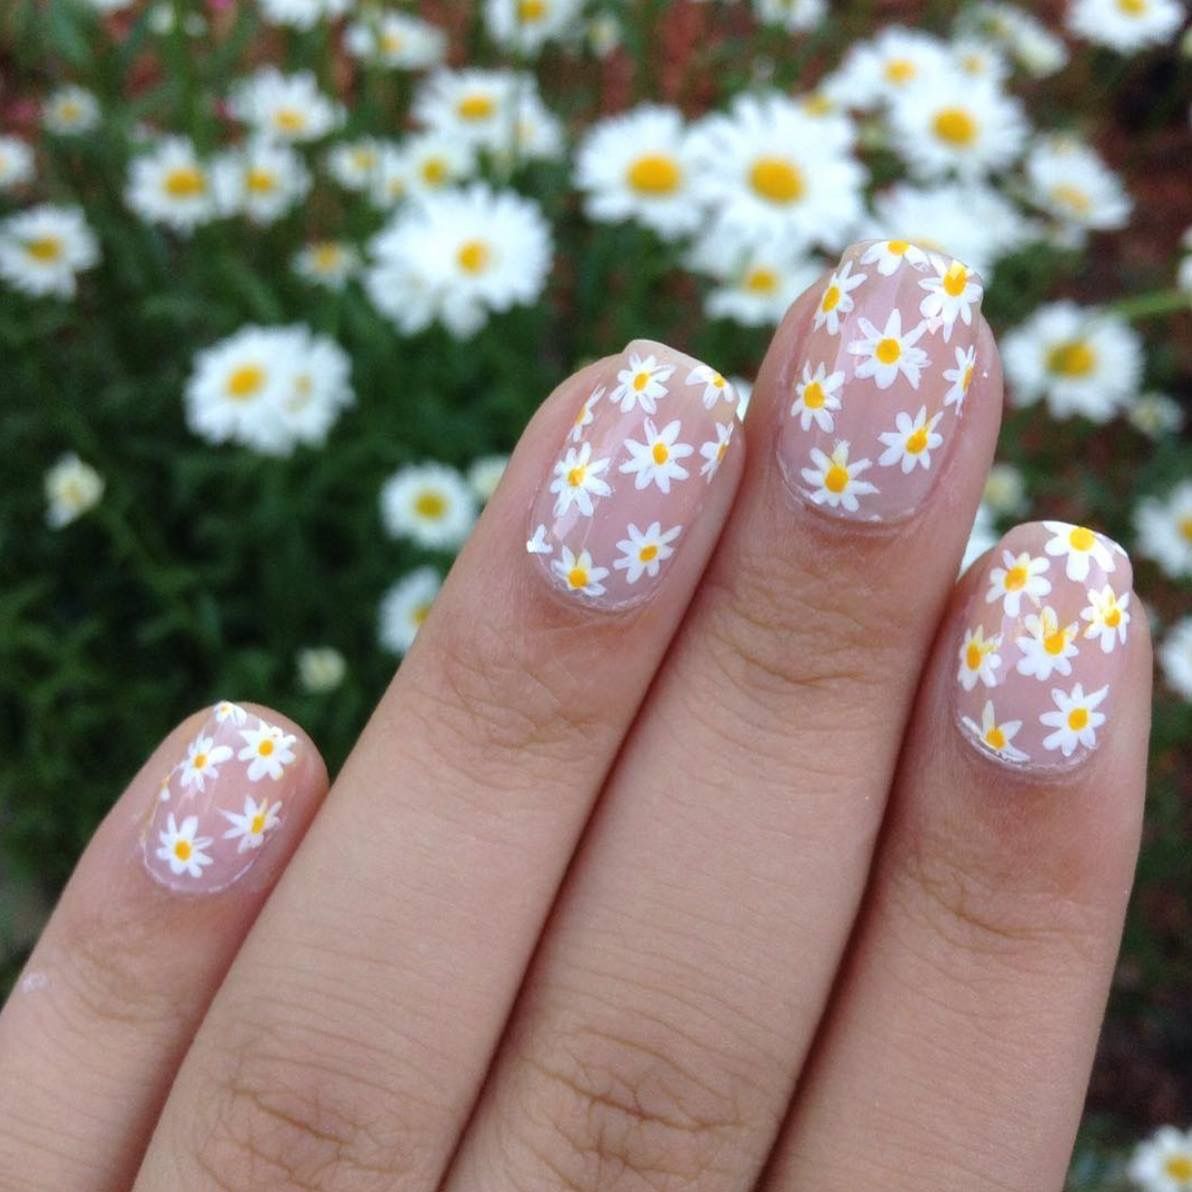 Trang trí nails vẽ hoa cúc họa mi Hoa cúc họa mi nails art YouTube